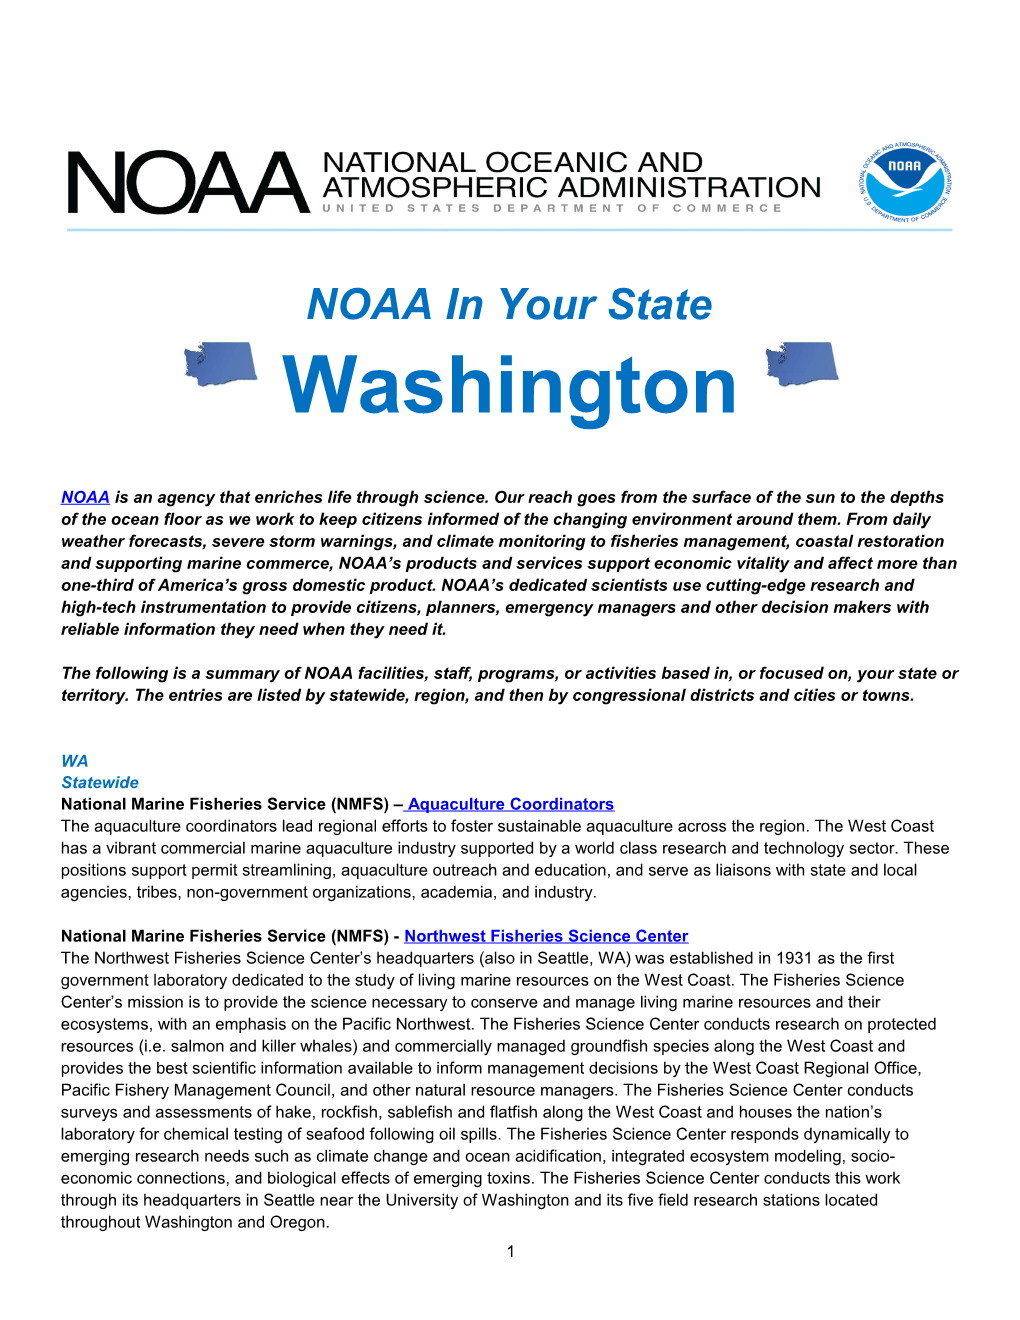 NOAA in Your State - Washington